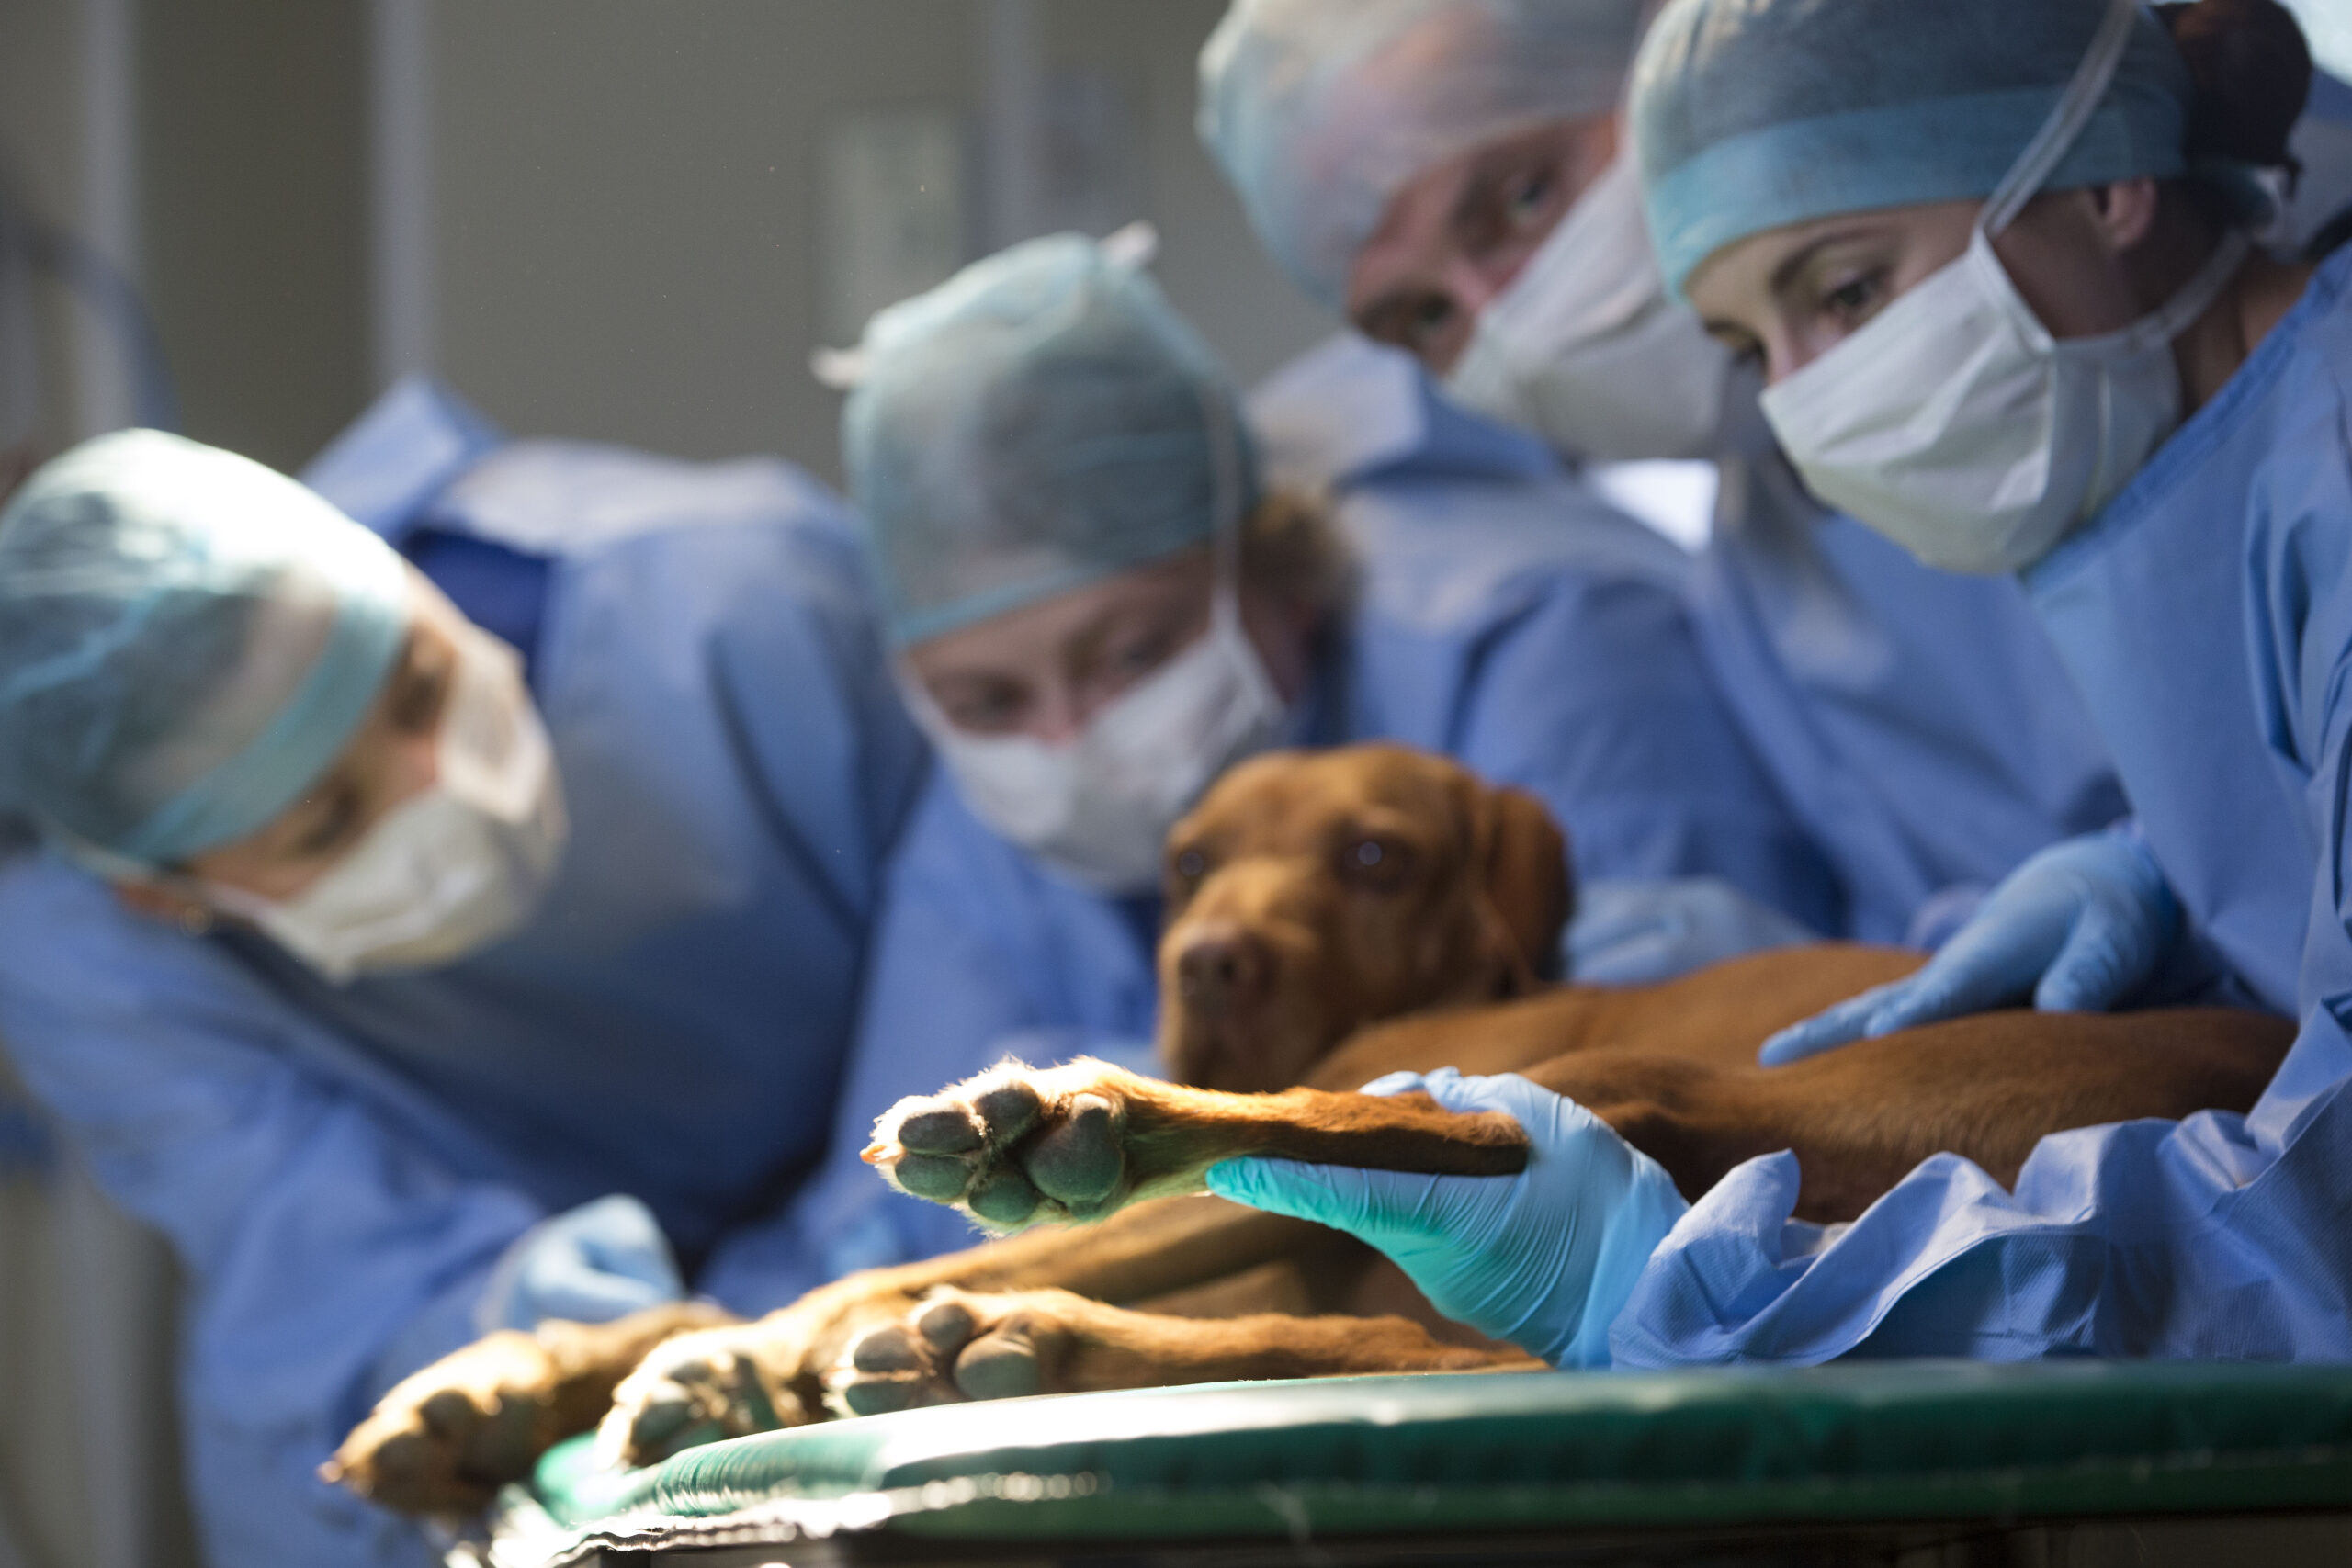 Хирургия животных